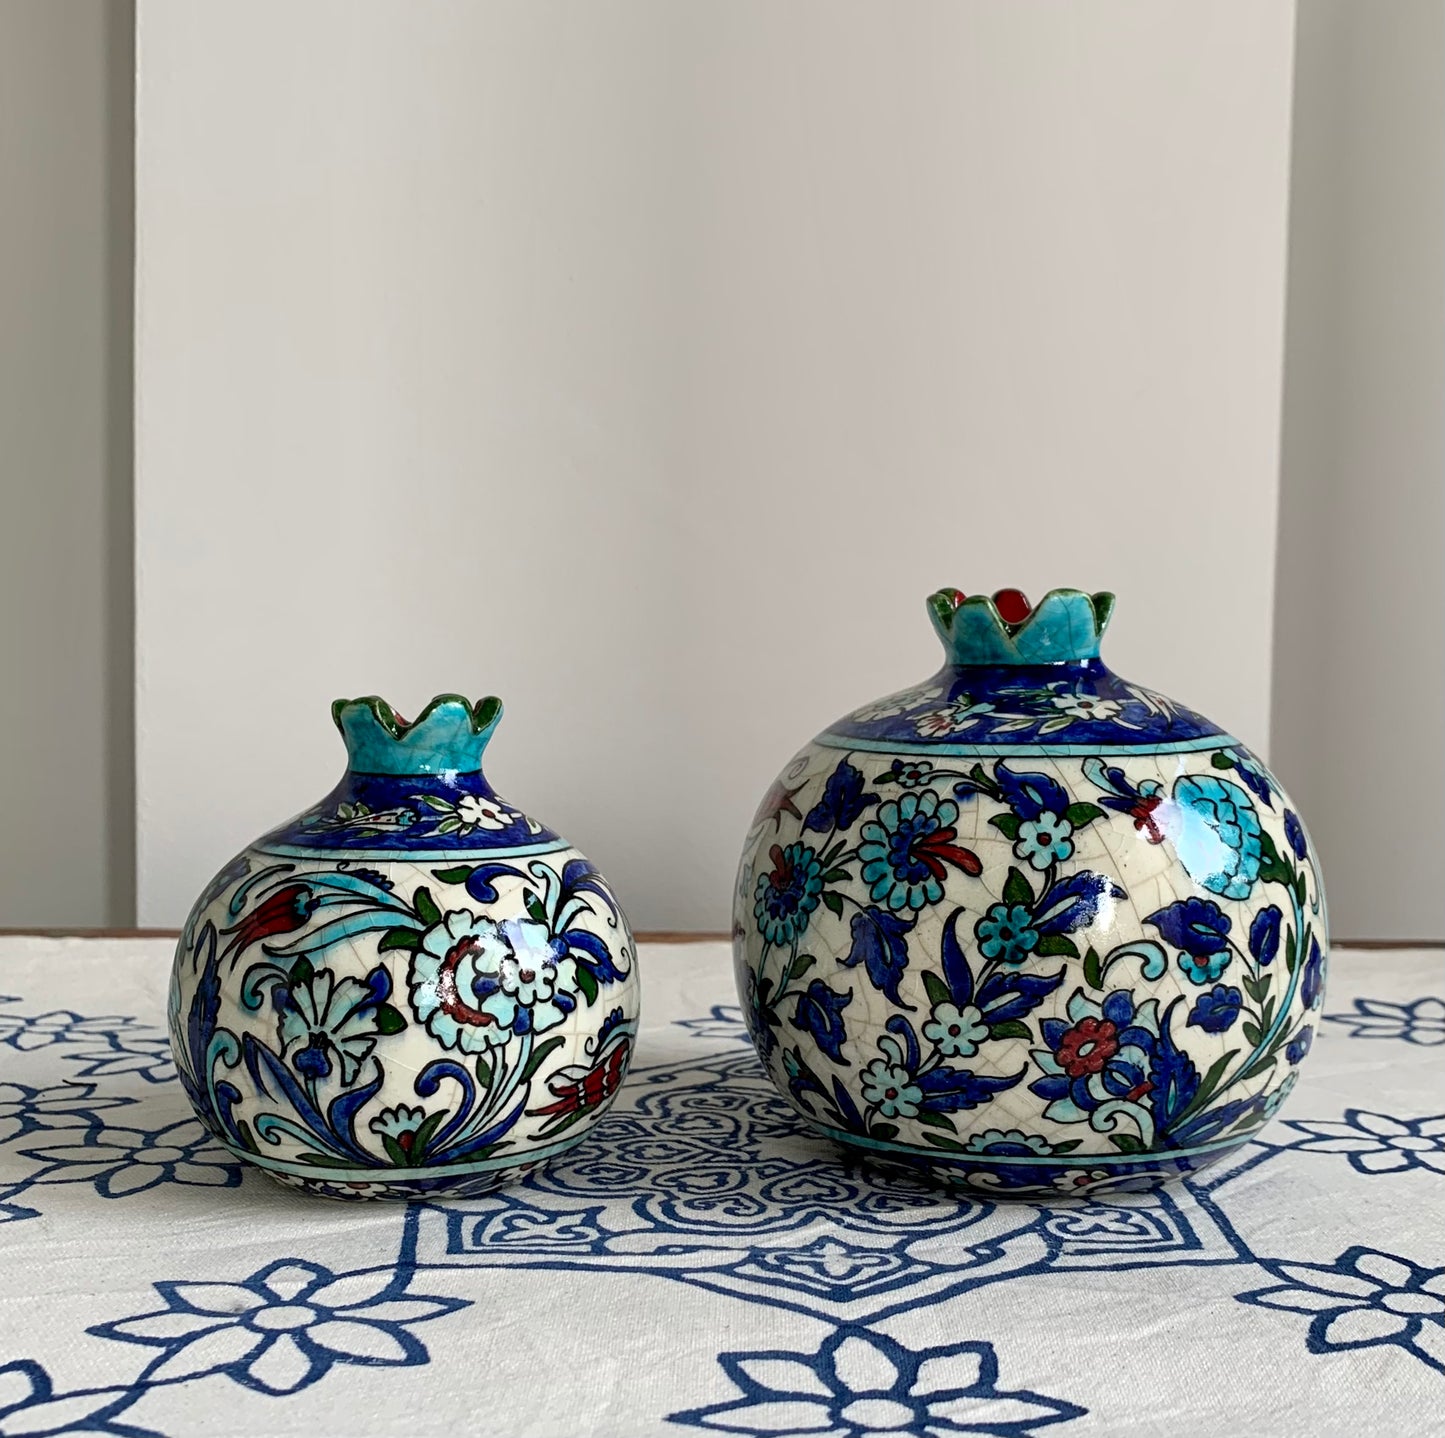 Hand-Painted Glazed Ceramic Pomegranate